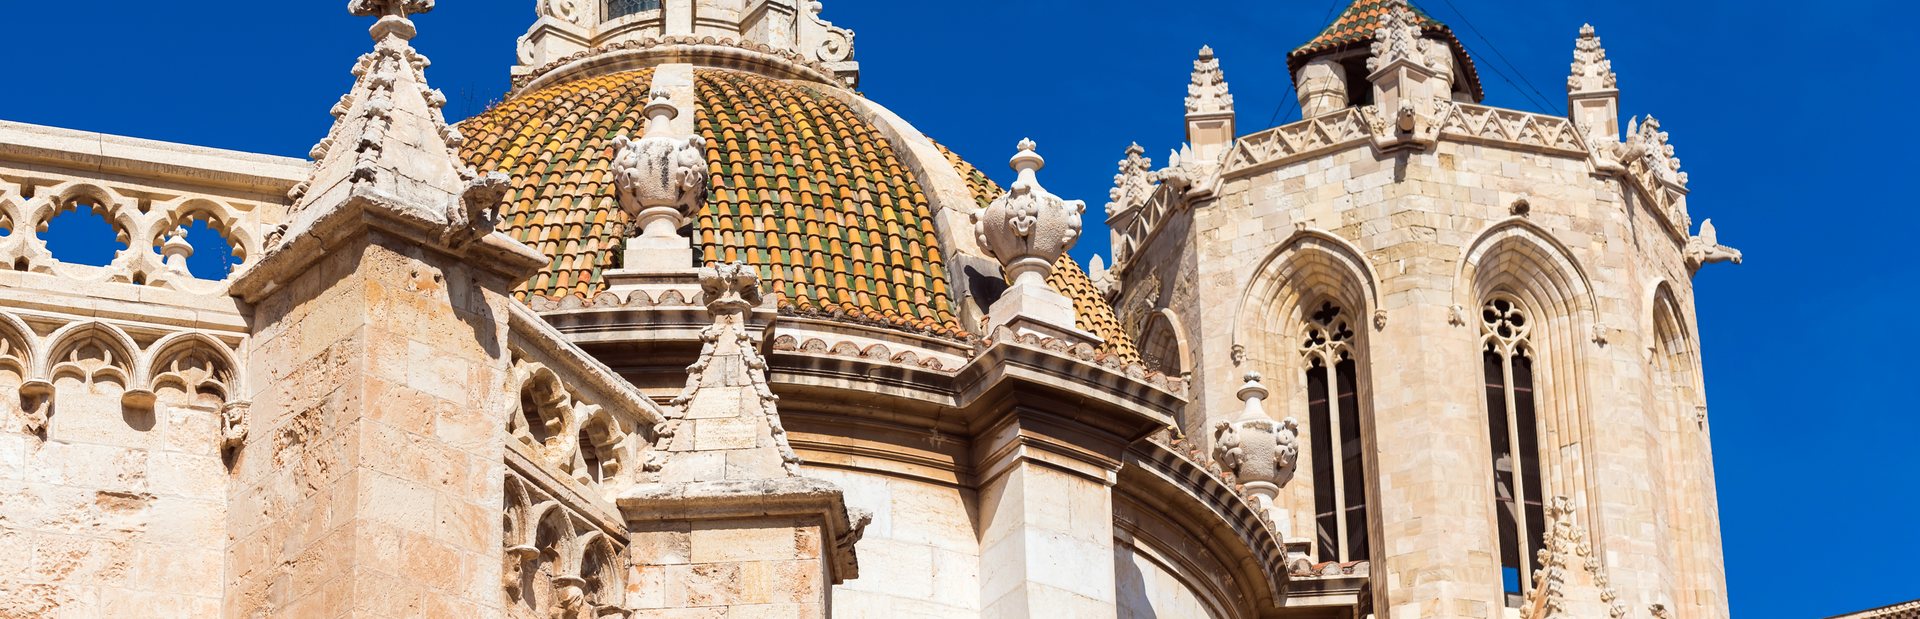 Cathedral of Tarragona Image 1